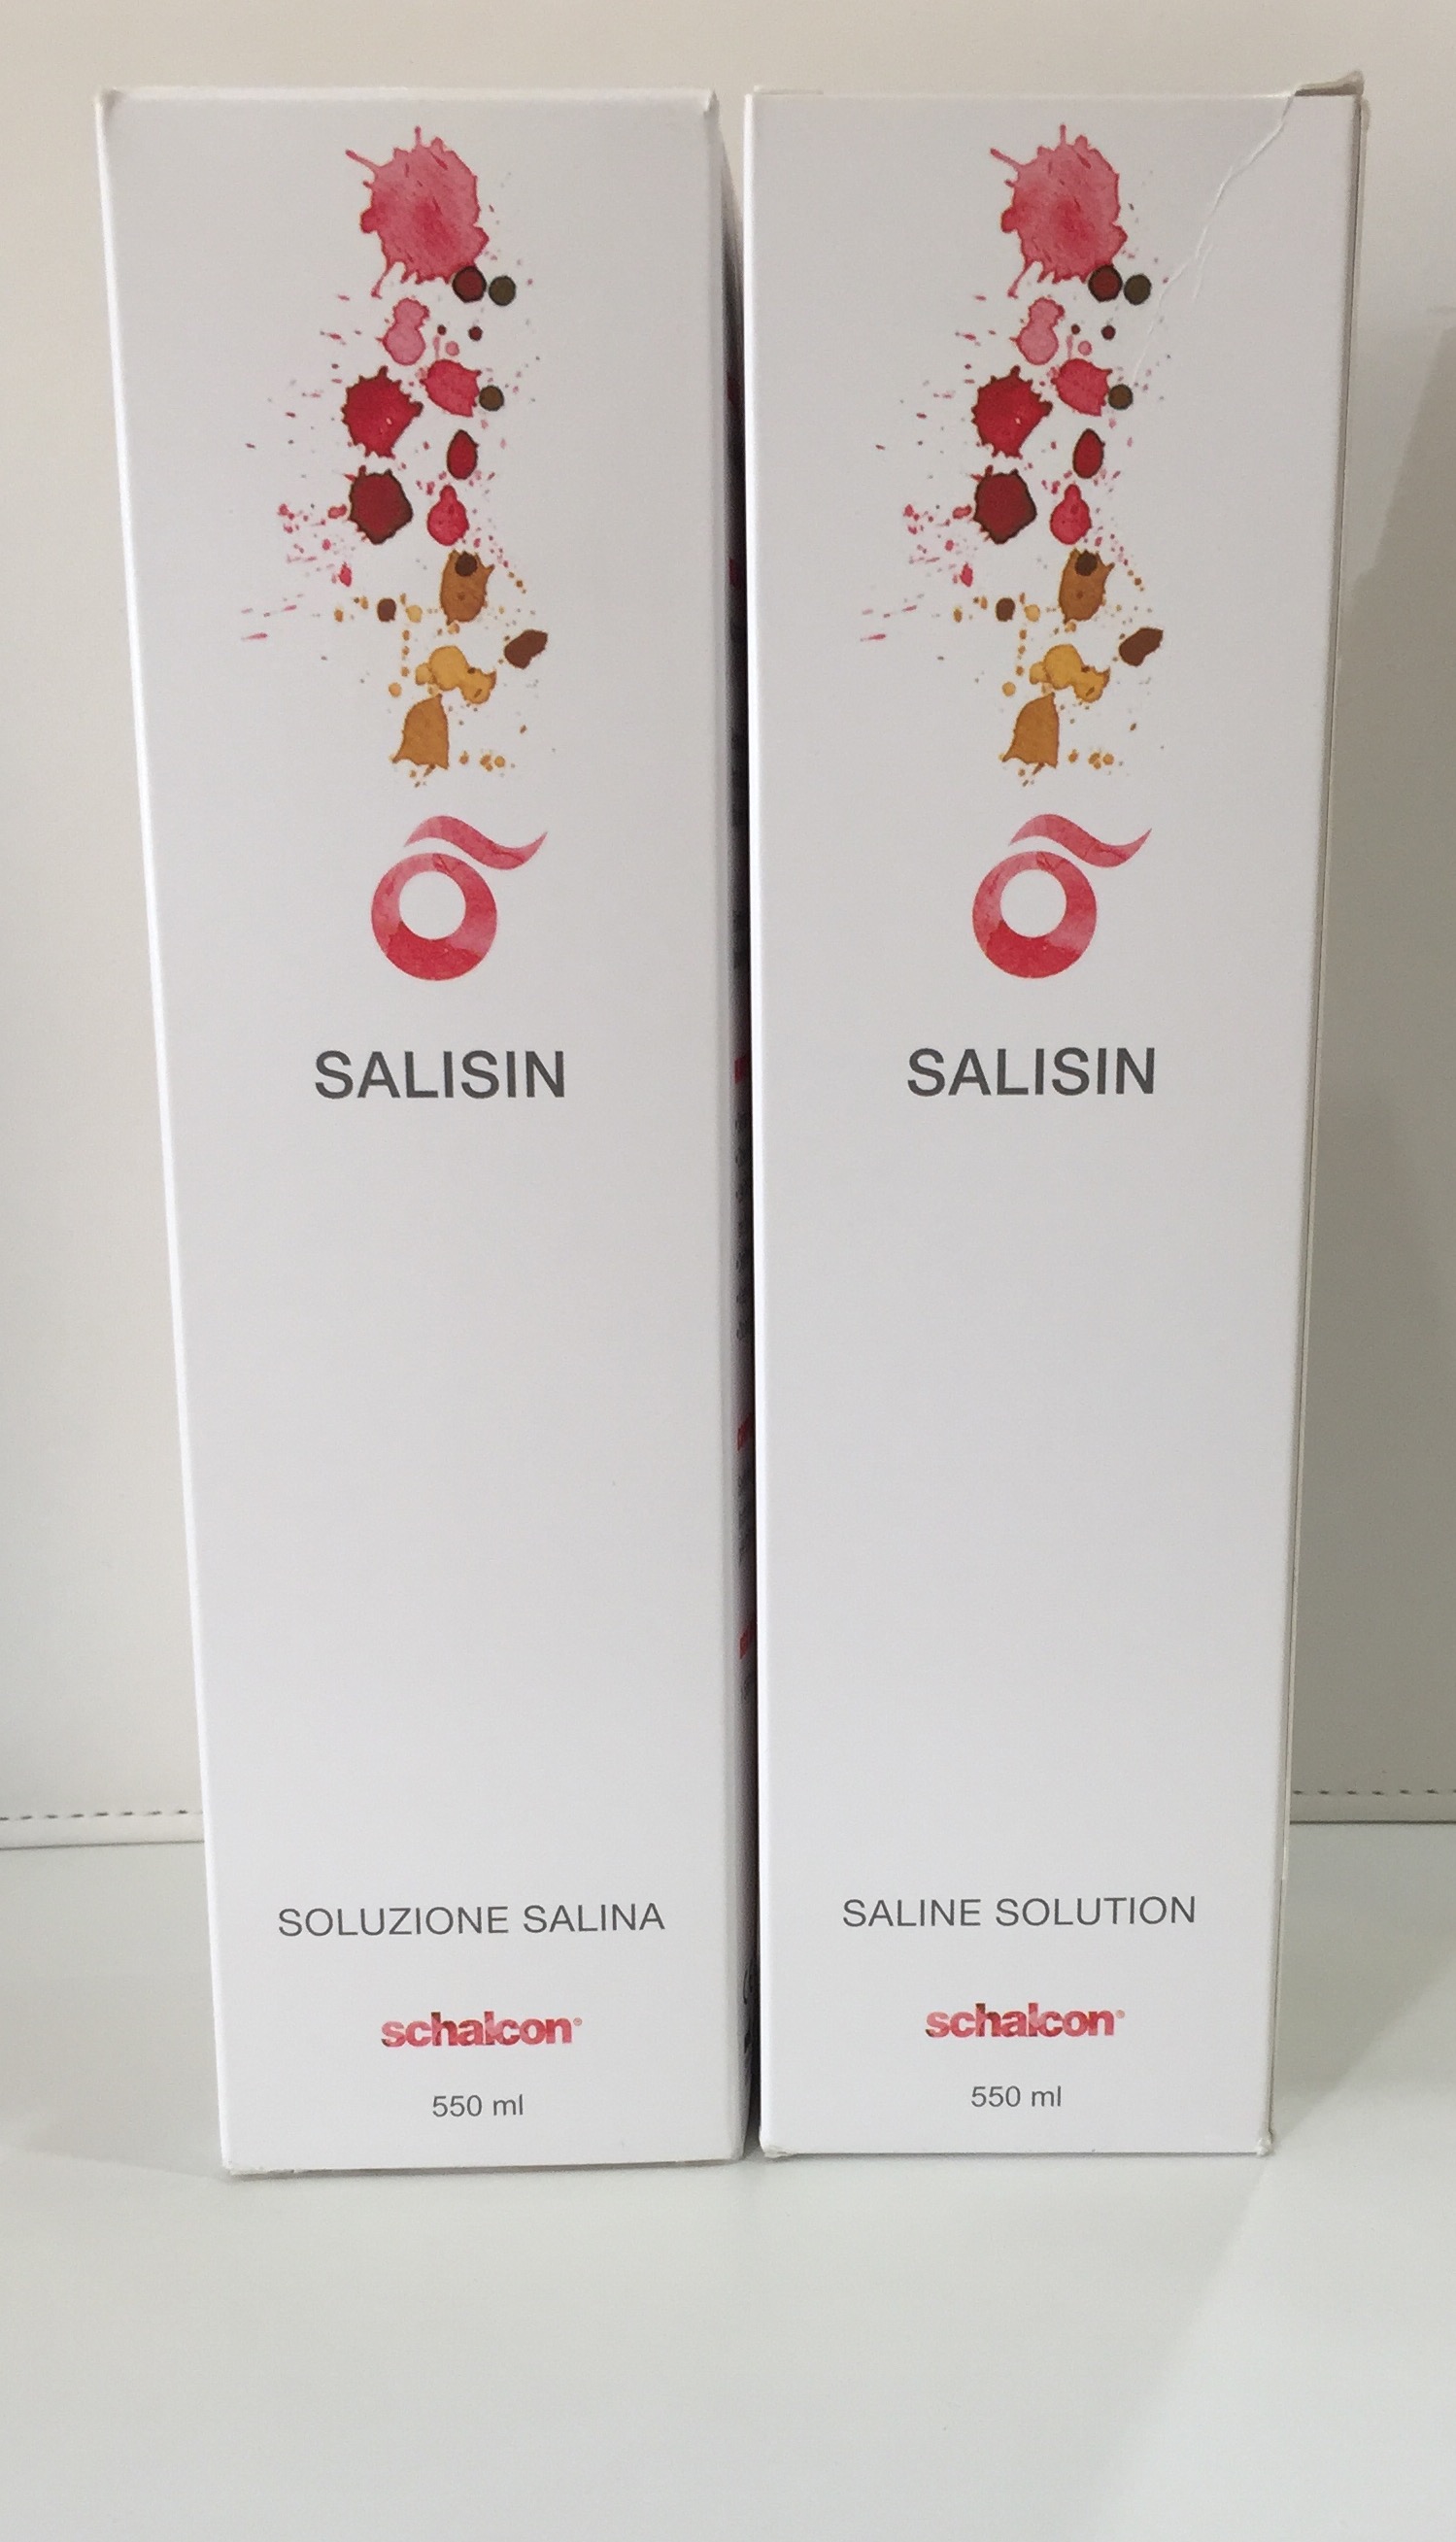 SALISIN SOLUZIONE SALINA 550 ML – 4X – Olent